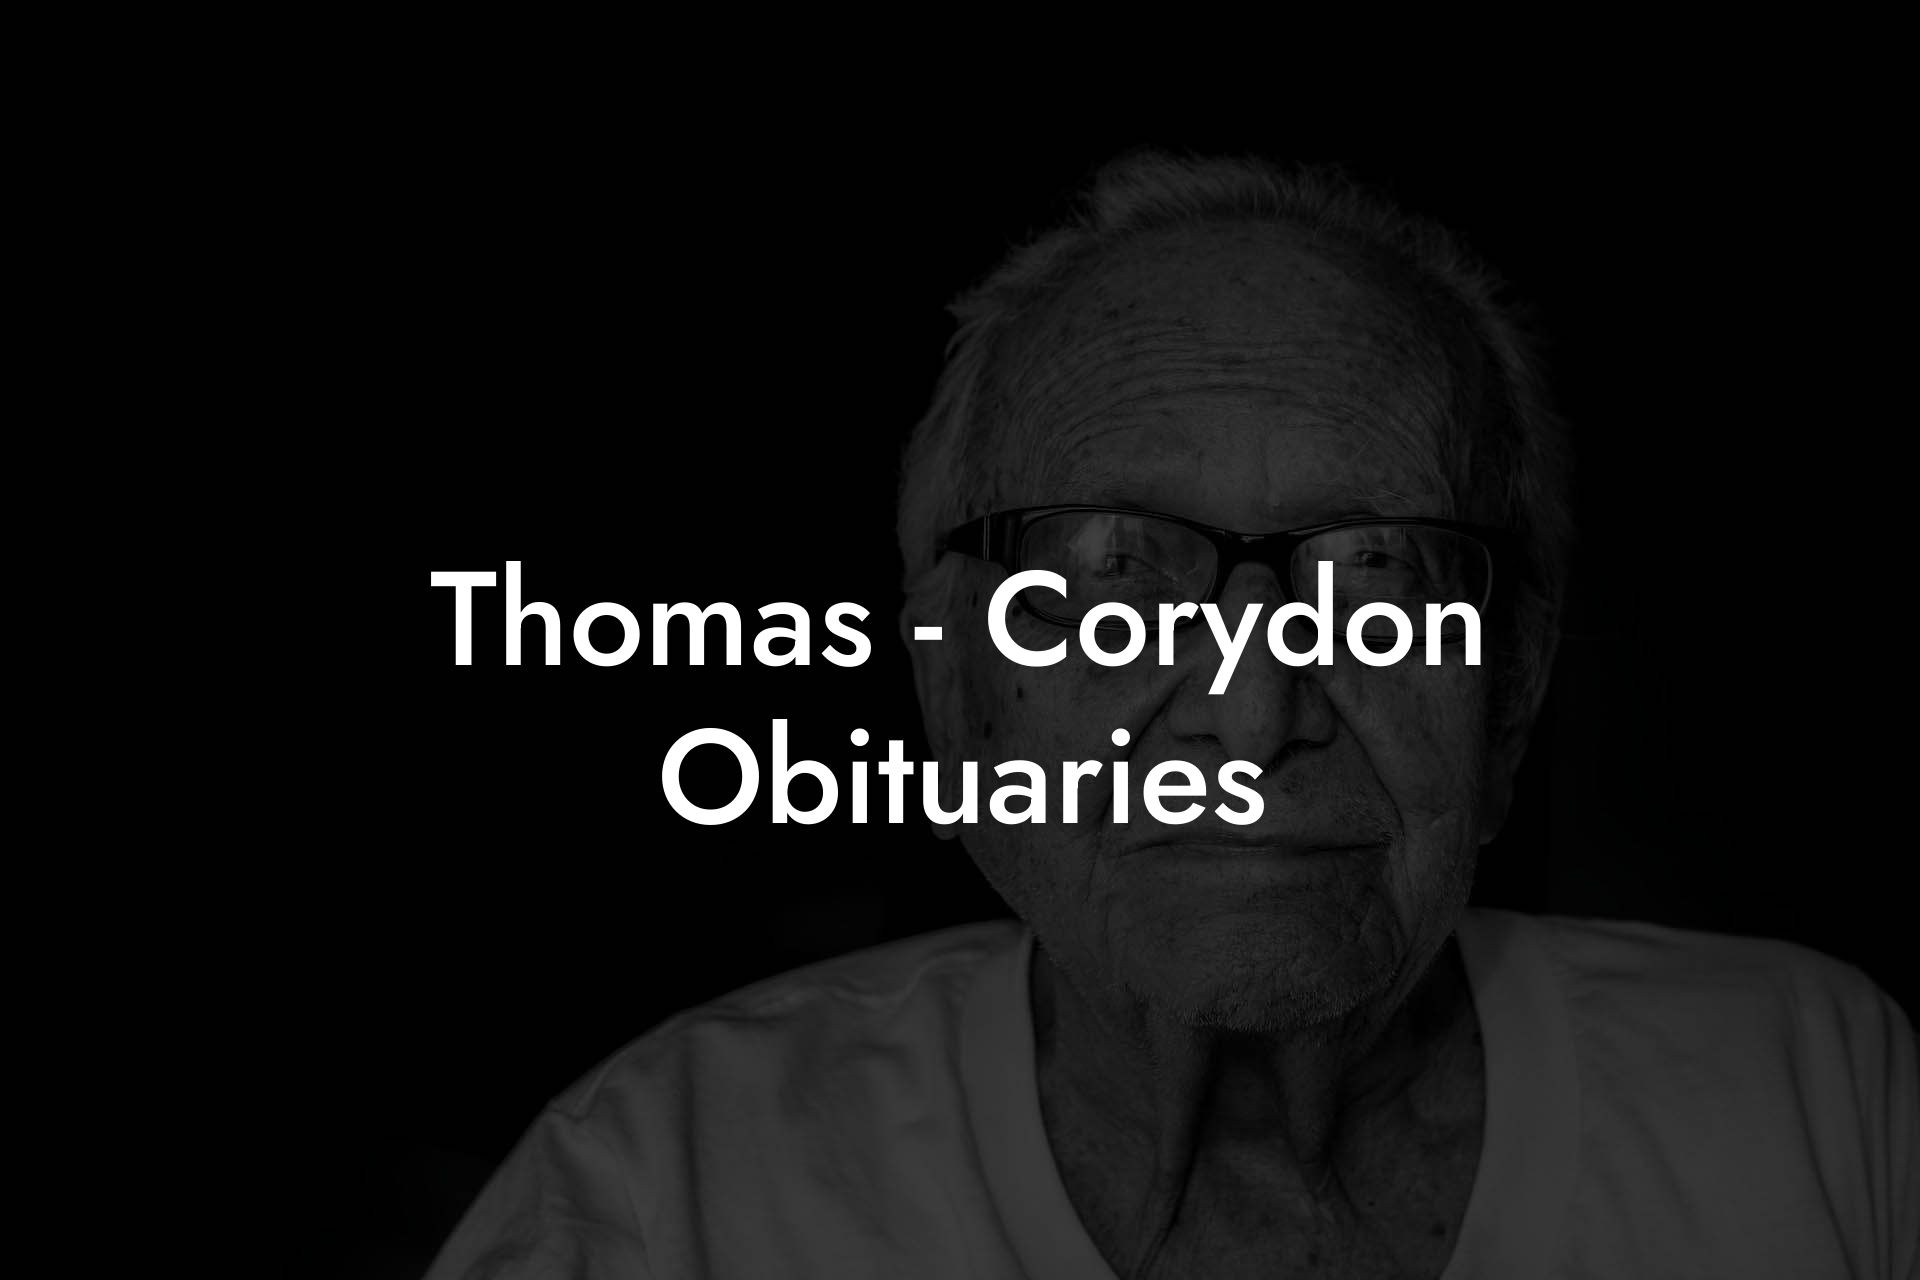 Thomas - Corydon Obituaries